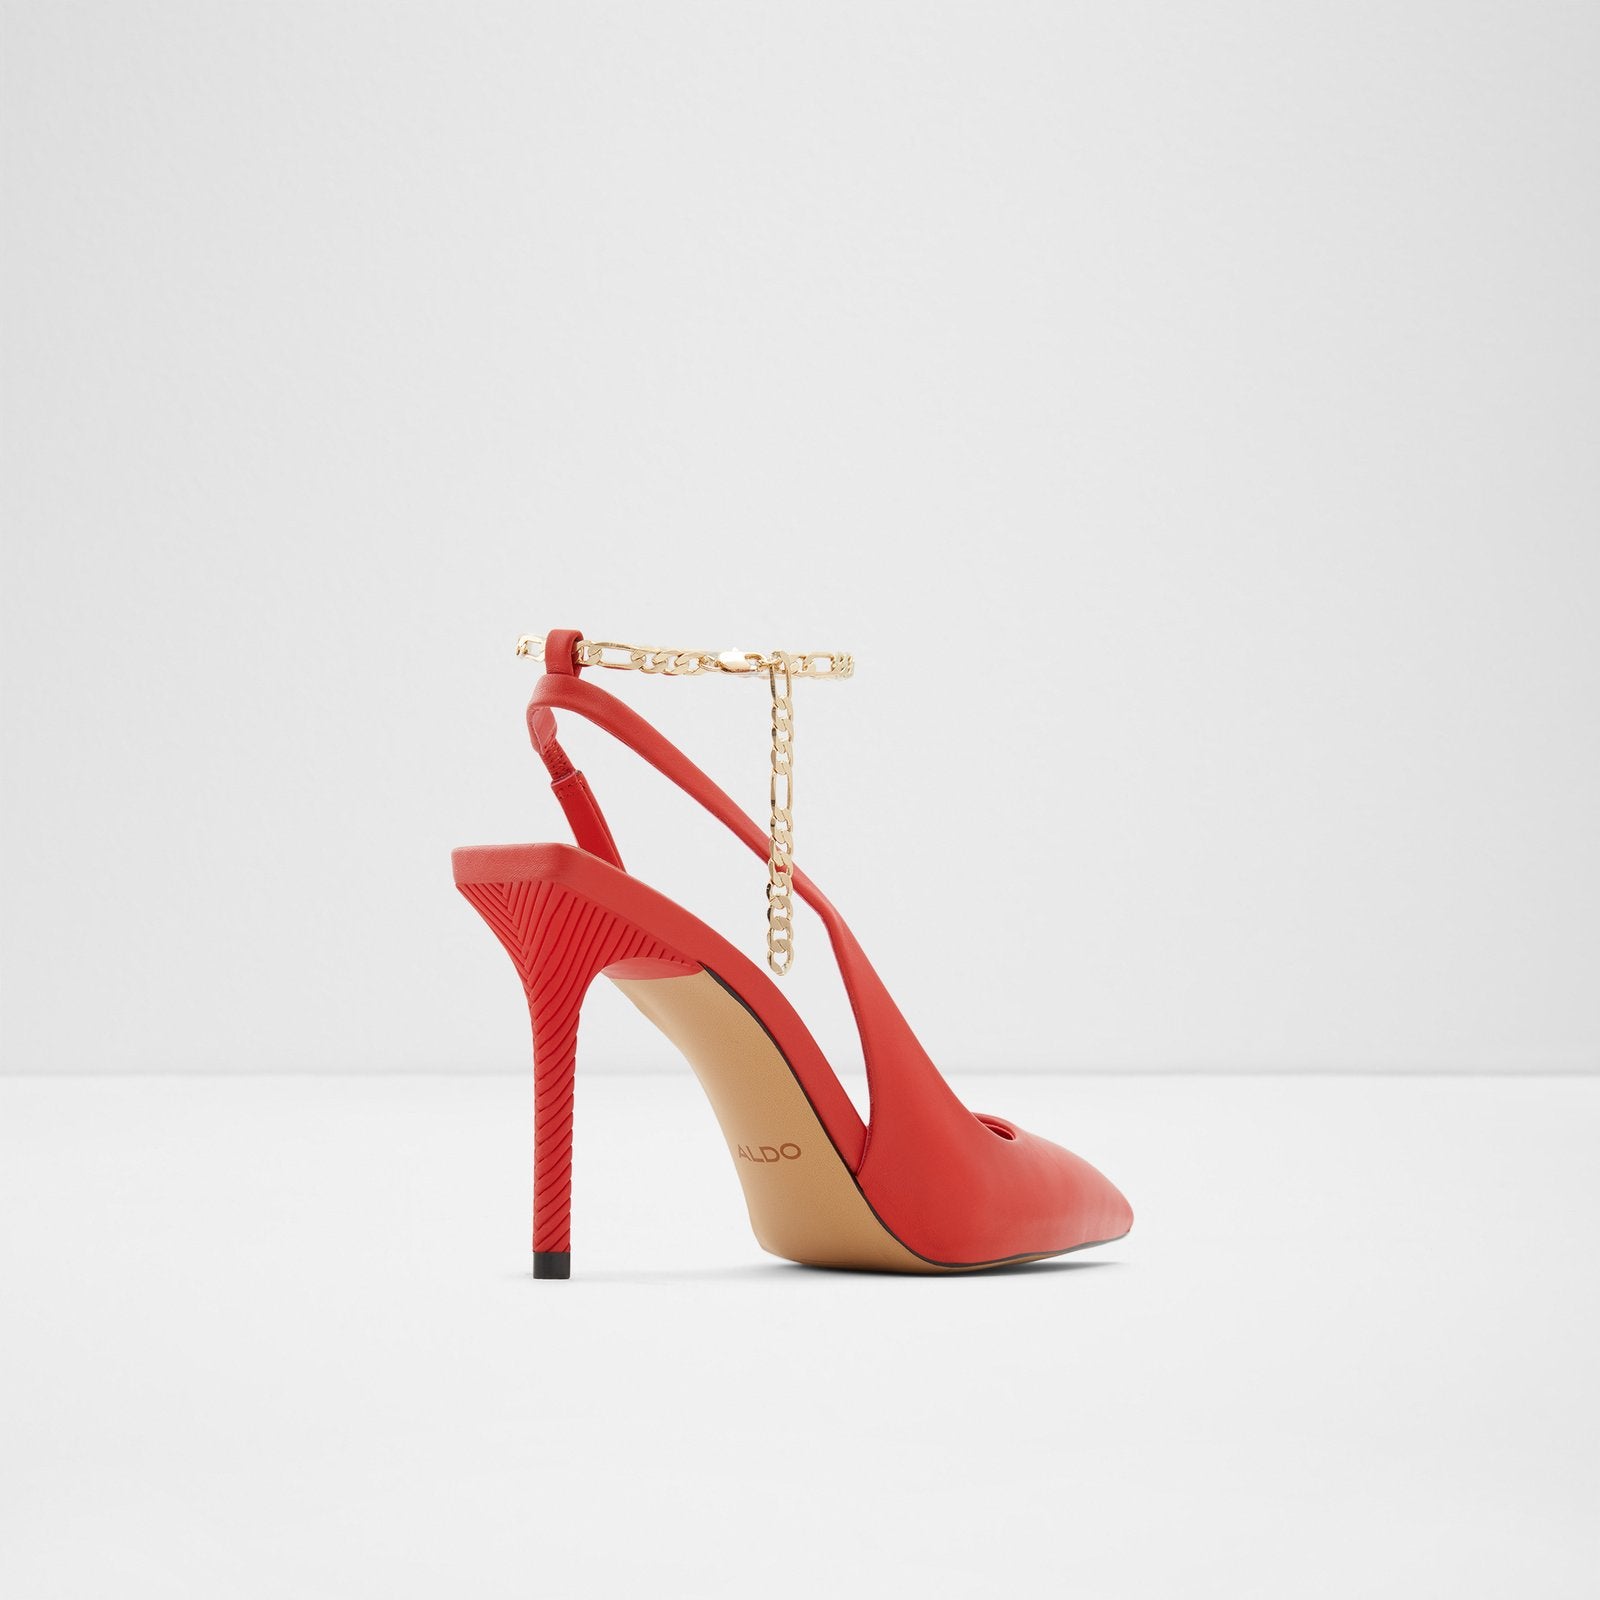 Tirarithchain Women Shoes - Red - ALDO KSA